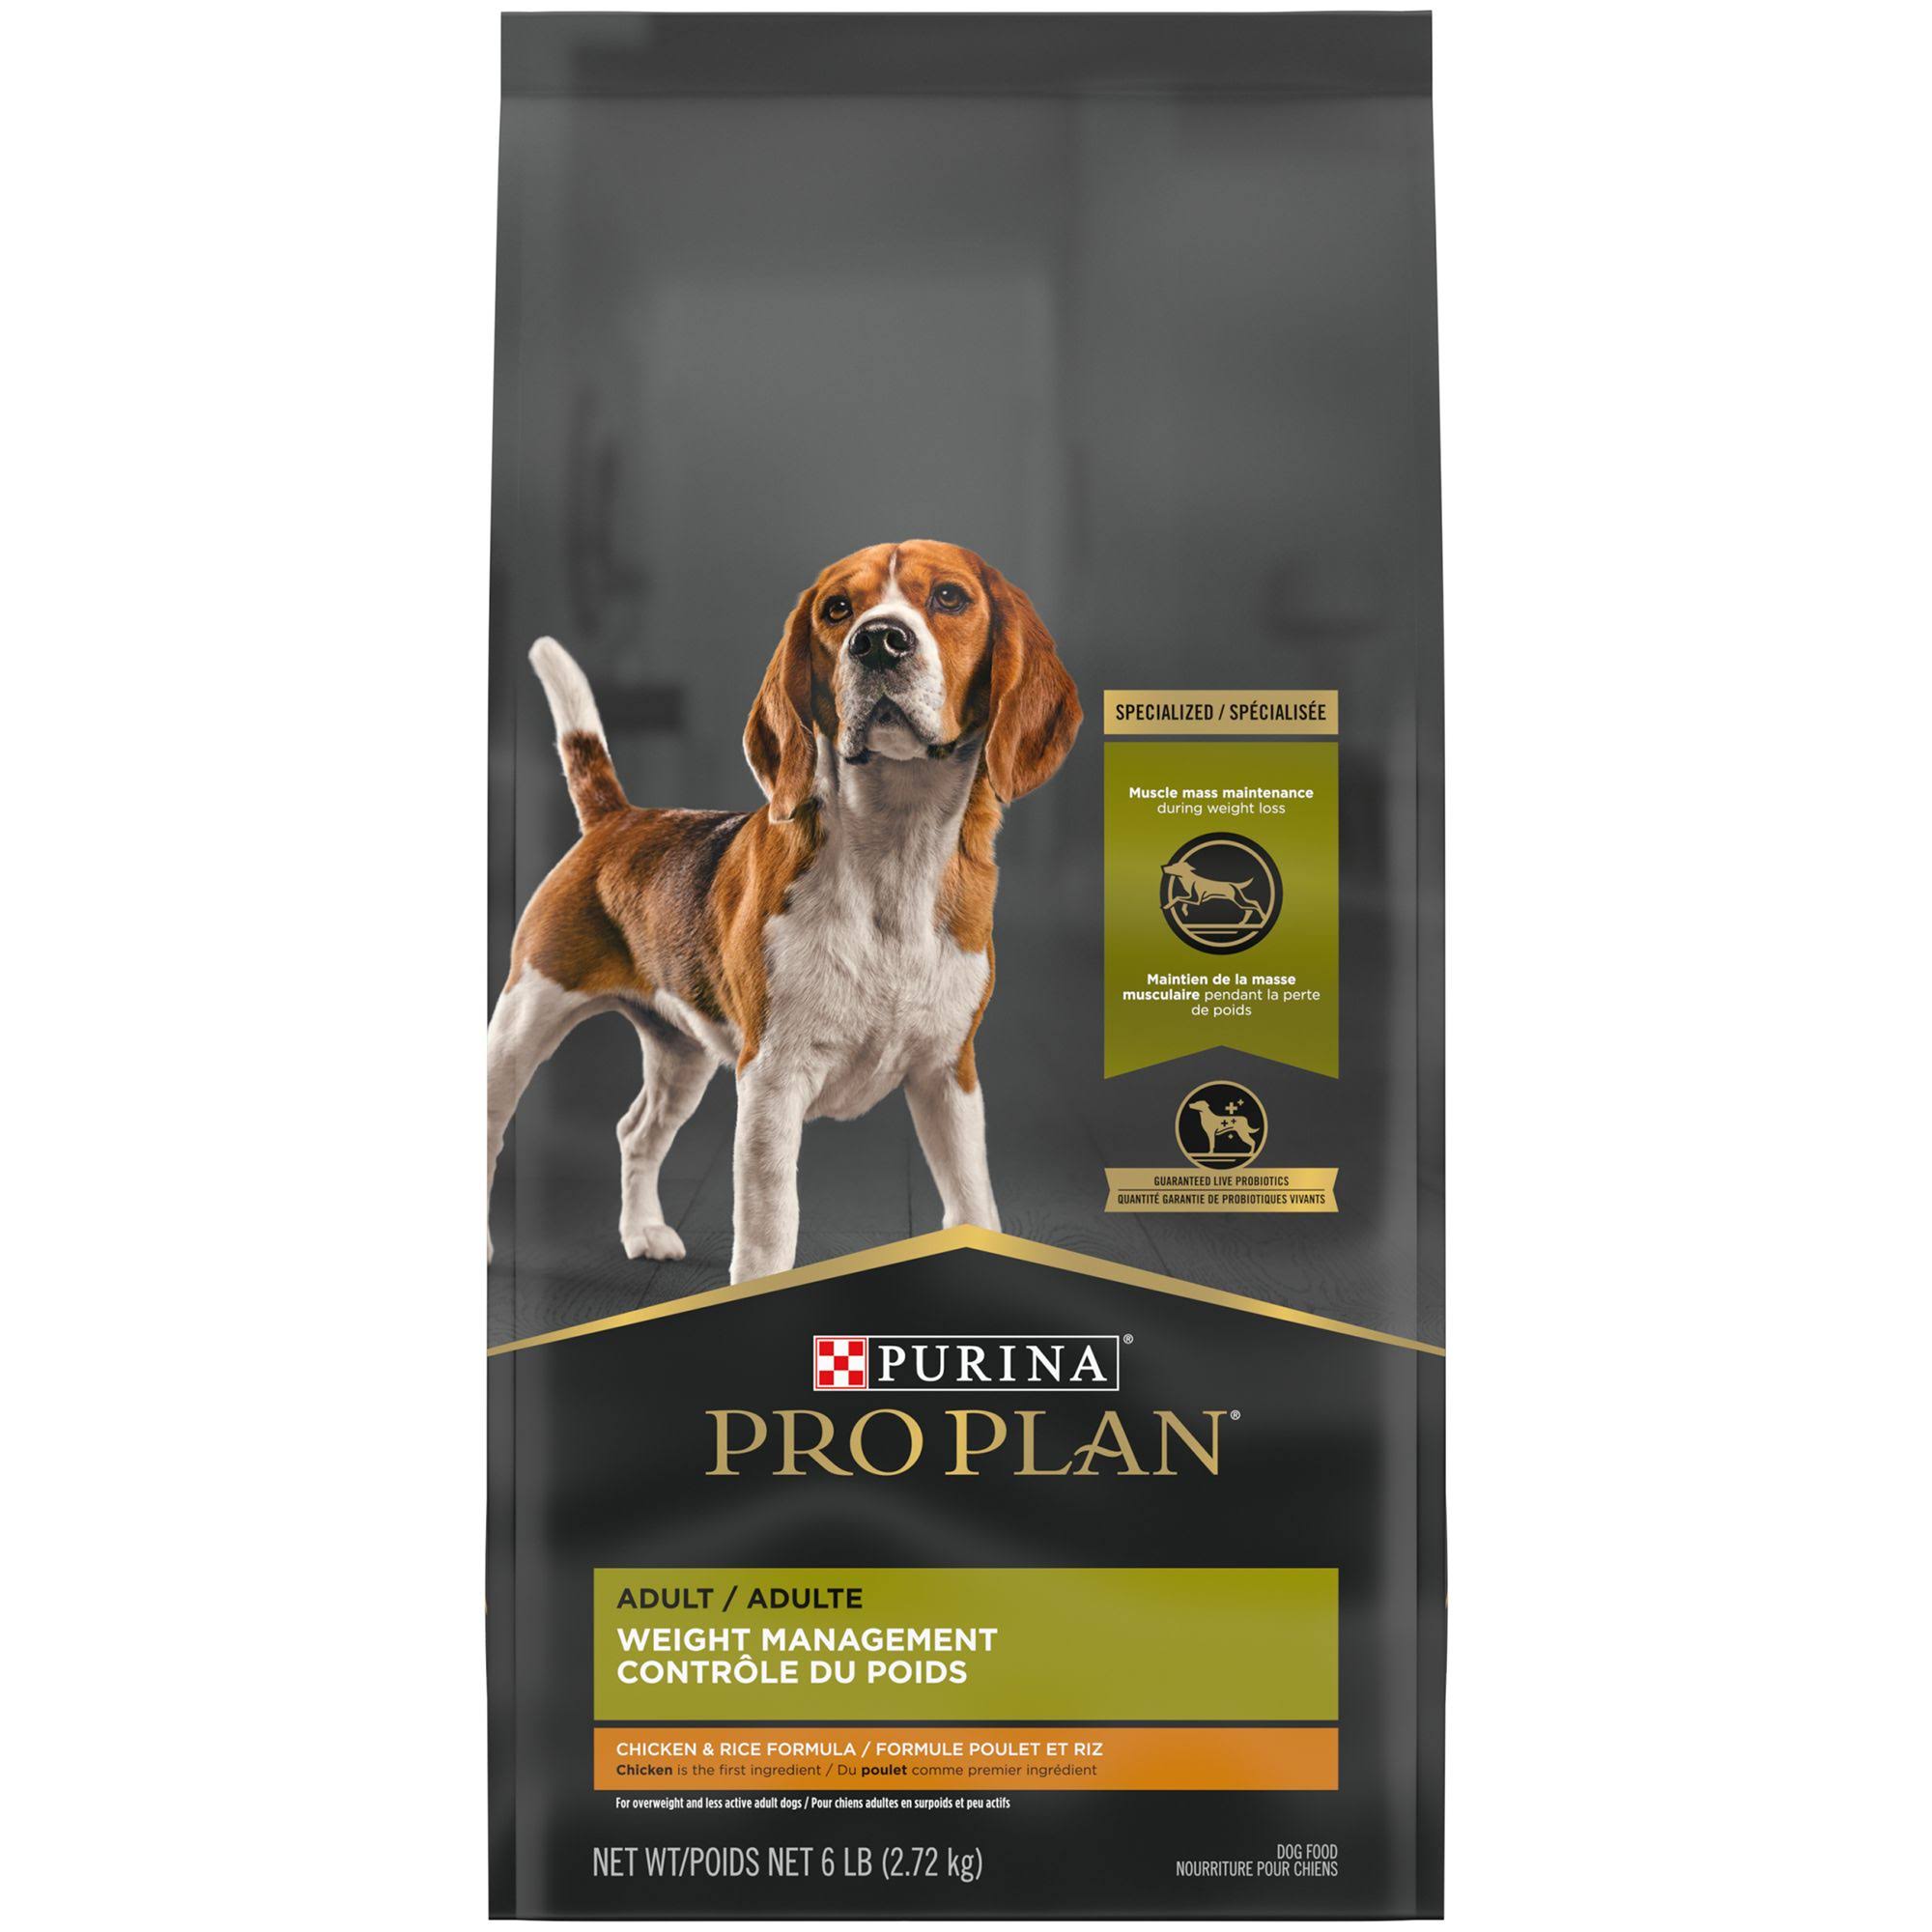 Purina Pro Plan Focus Weight Management Formula Dry Dog Food - 6lbs